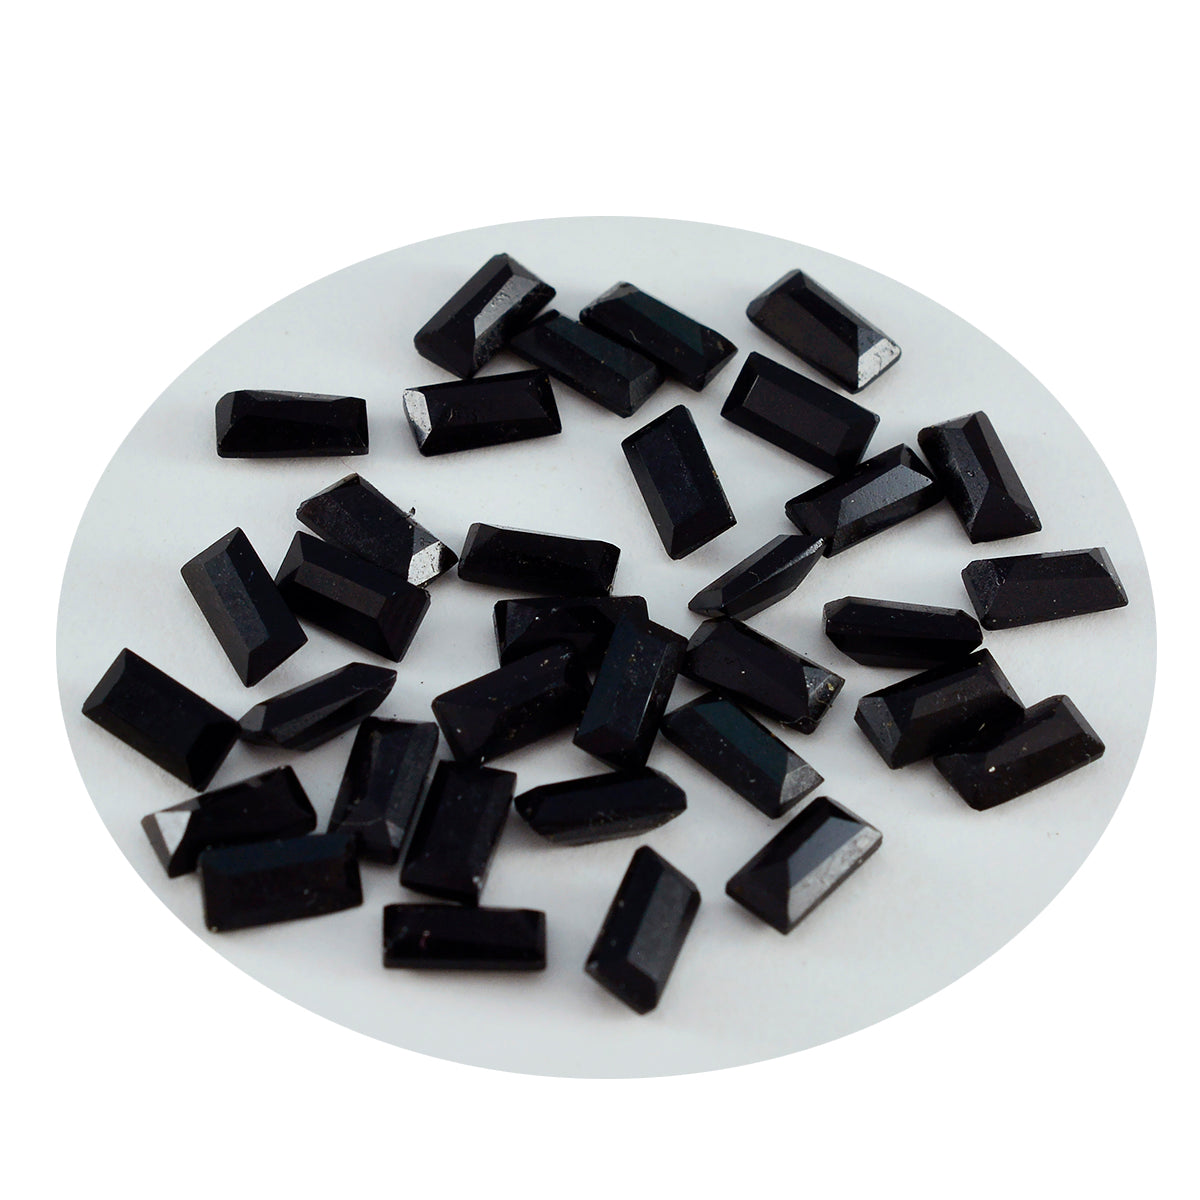 Riyogems 1PC Natural Black Onyx Faceted 4x8 mm Baguette Shape beauty Quality Stone